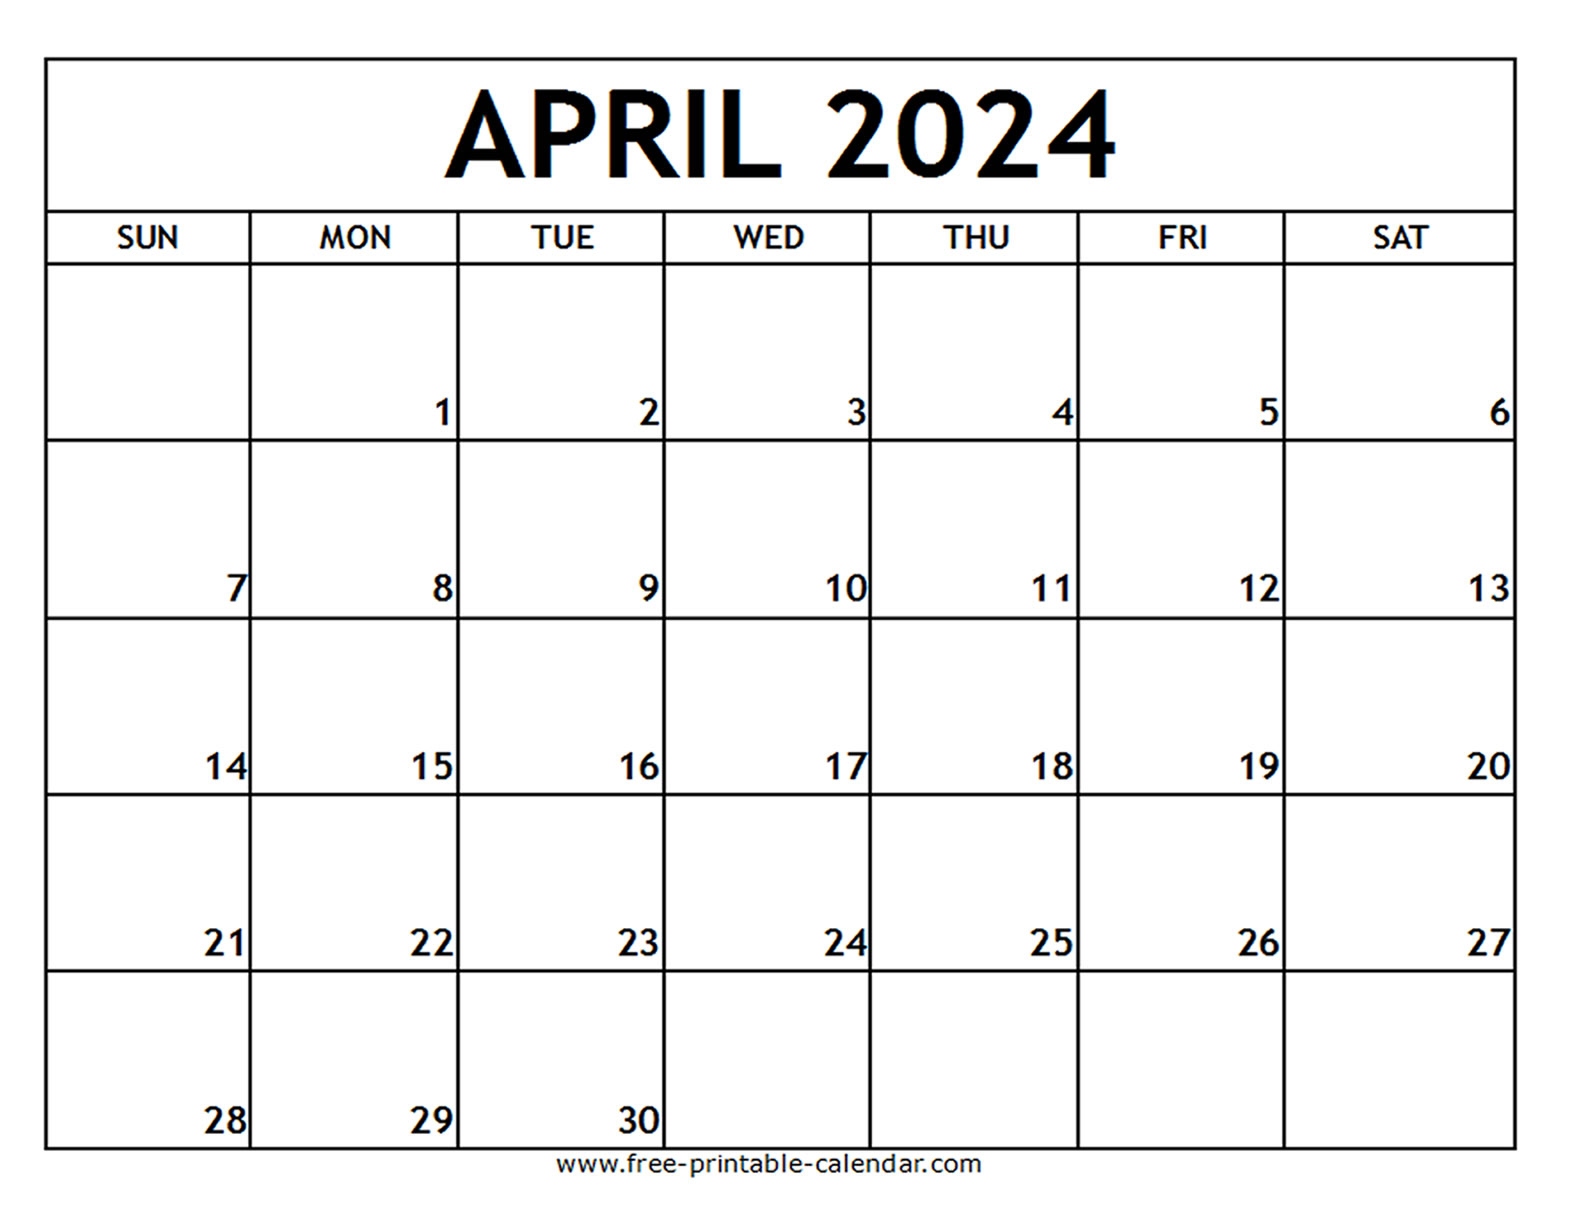 April 2024 Printable Calendar - Free-Printable-Calendar in Free Printable April 2024 Calendar Pdf